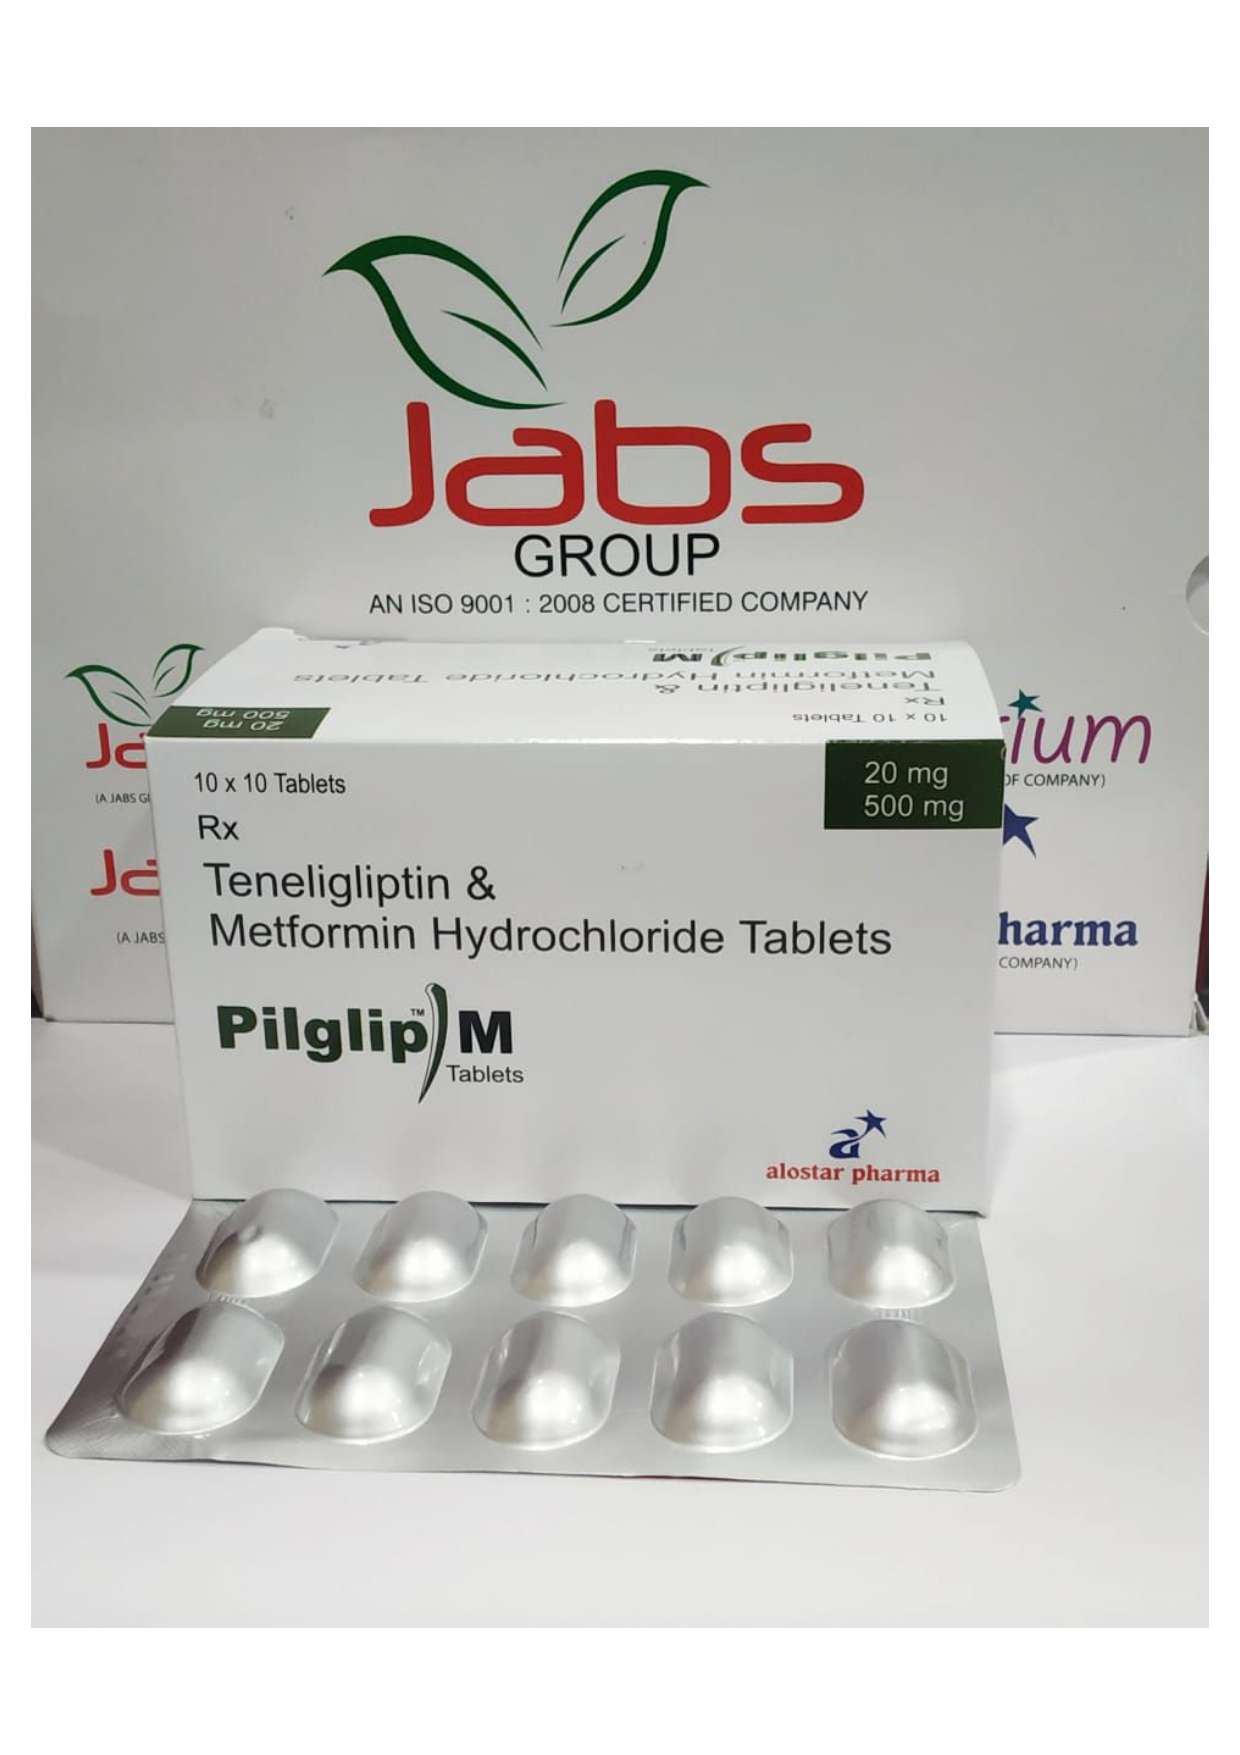 teneligliptin 20 mg + metformin hydrochloride 500mg